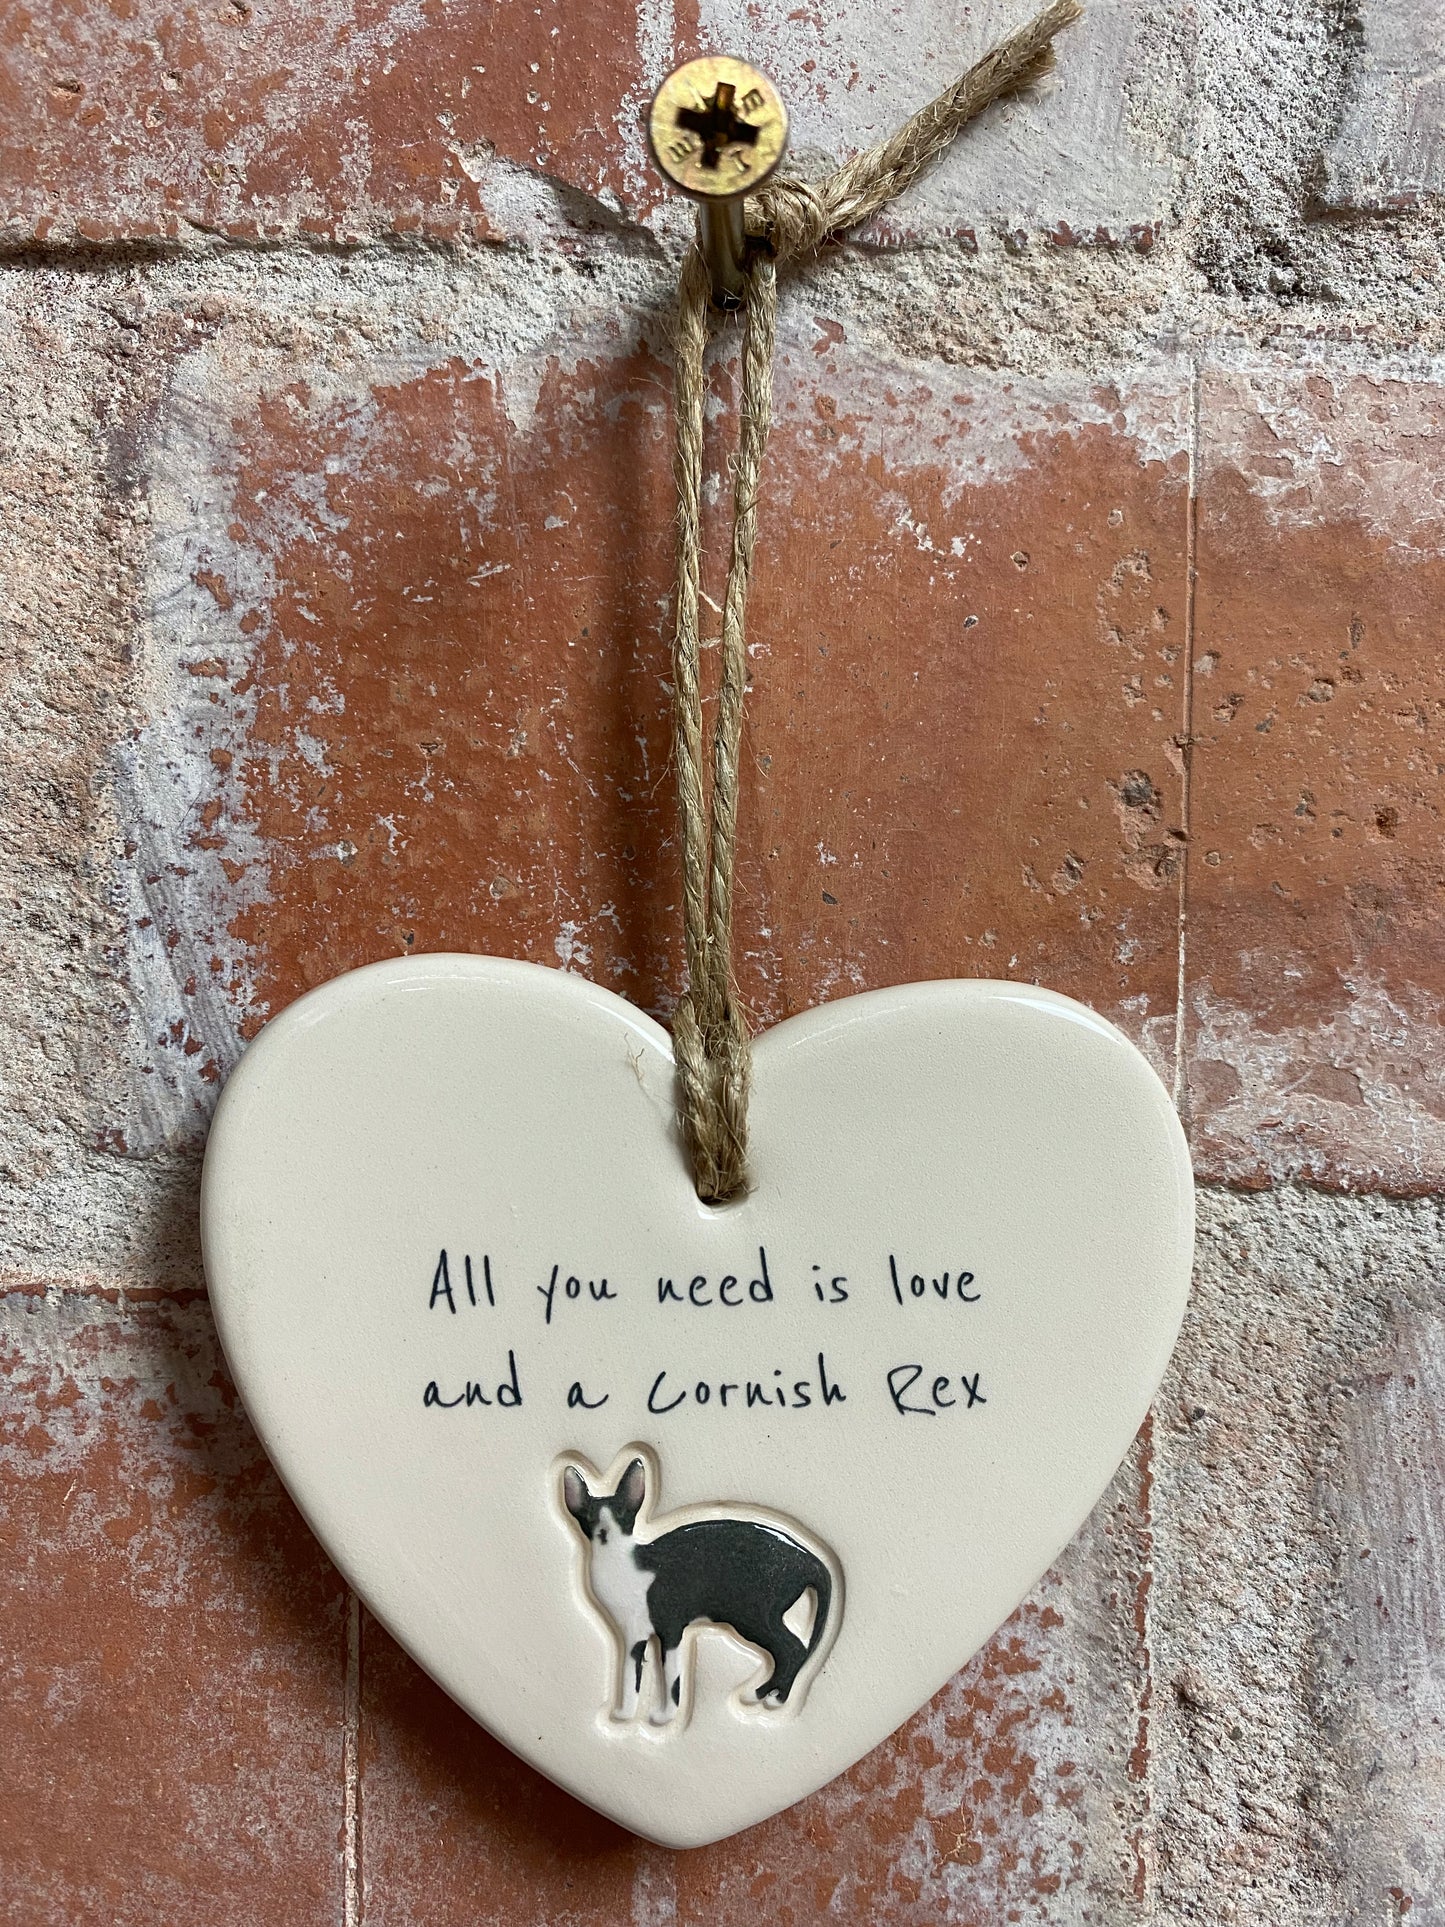 Cornish Rex Cat ceramic heart